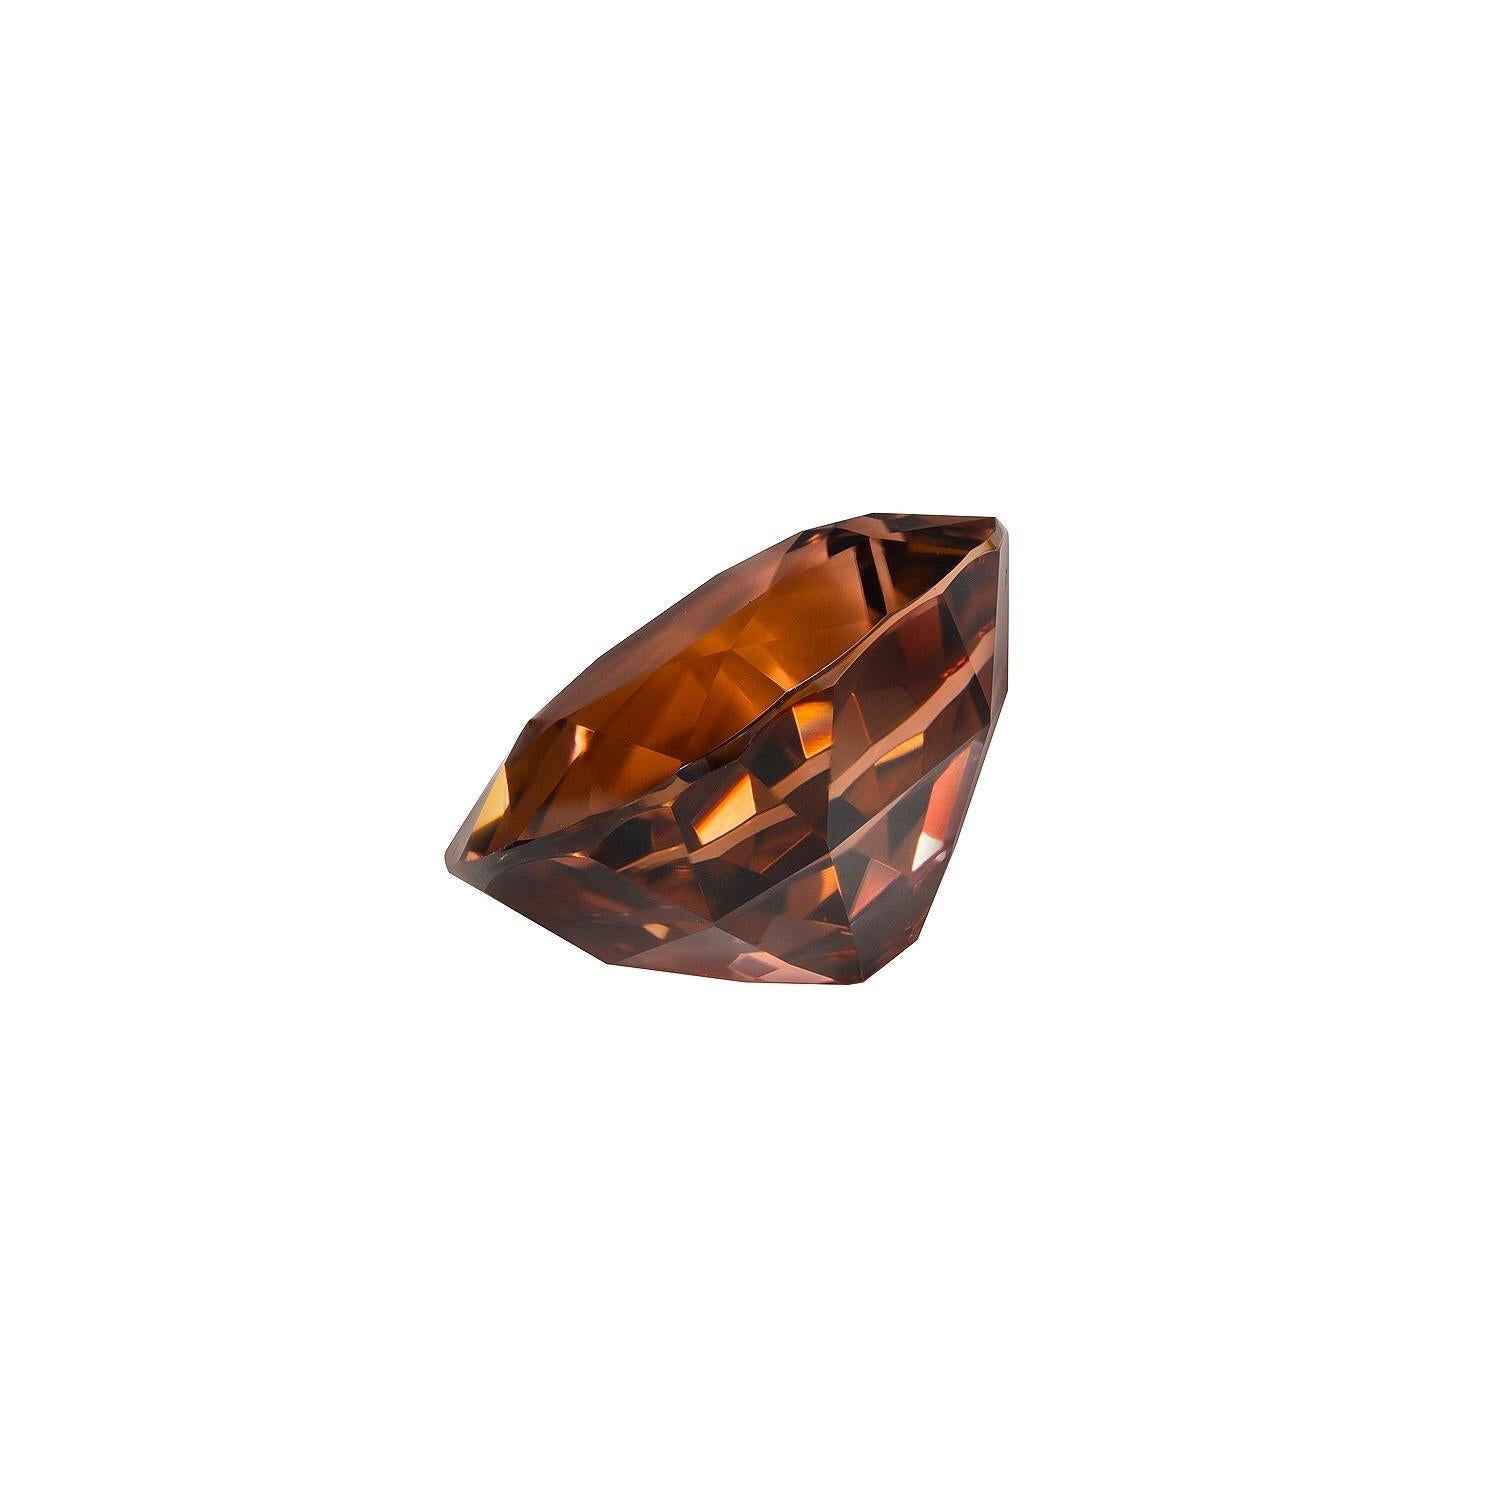 orange tourmaline crystal